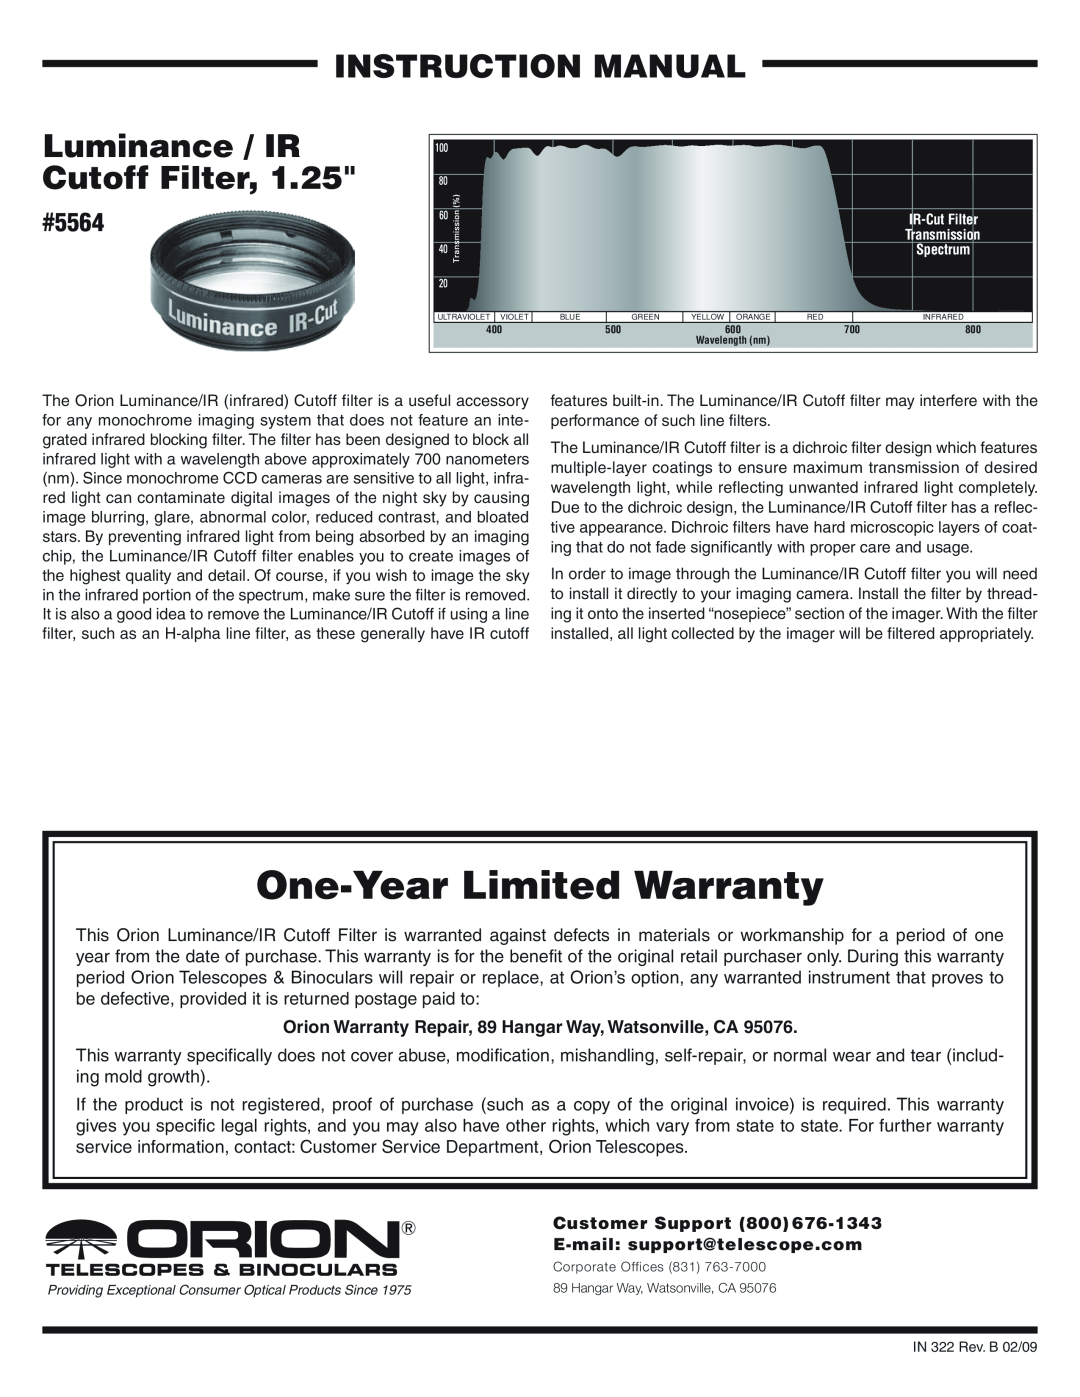 Orion instruction manual One-Year Limited Warranty, instruction Manual, Luminance / IR Cutoff Filter, #5564 